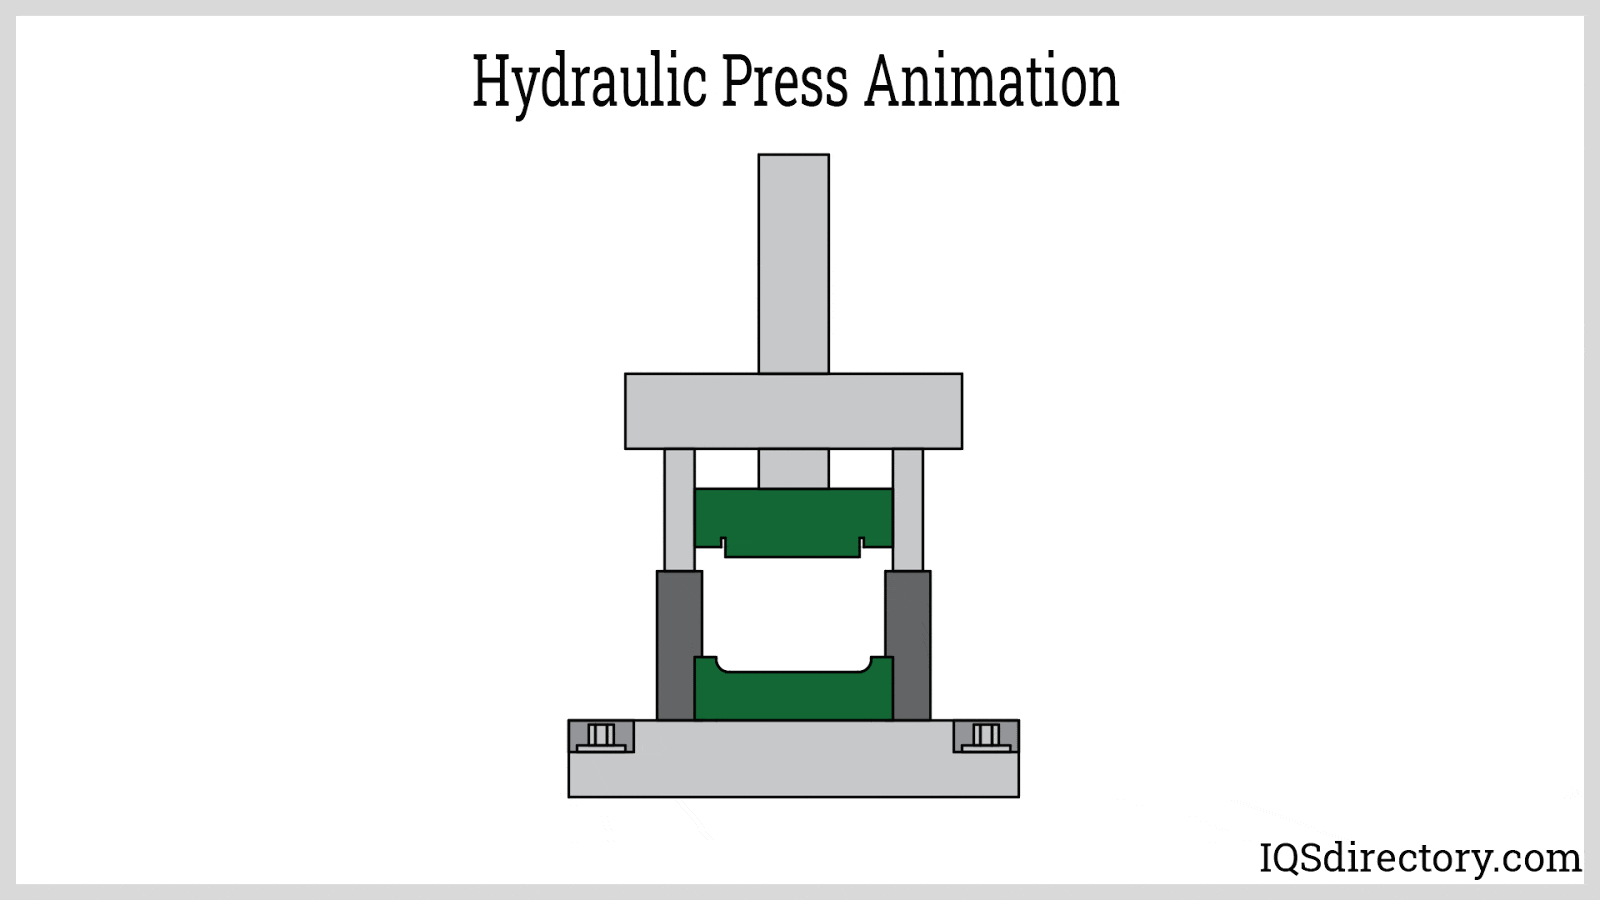 History of the Hydraulic Press